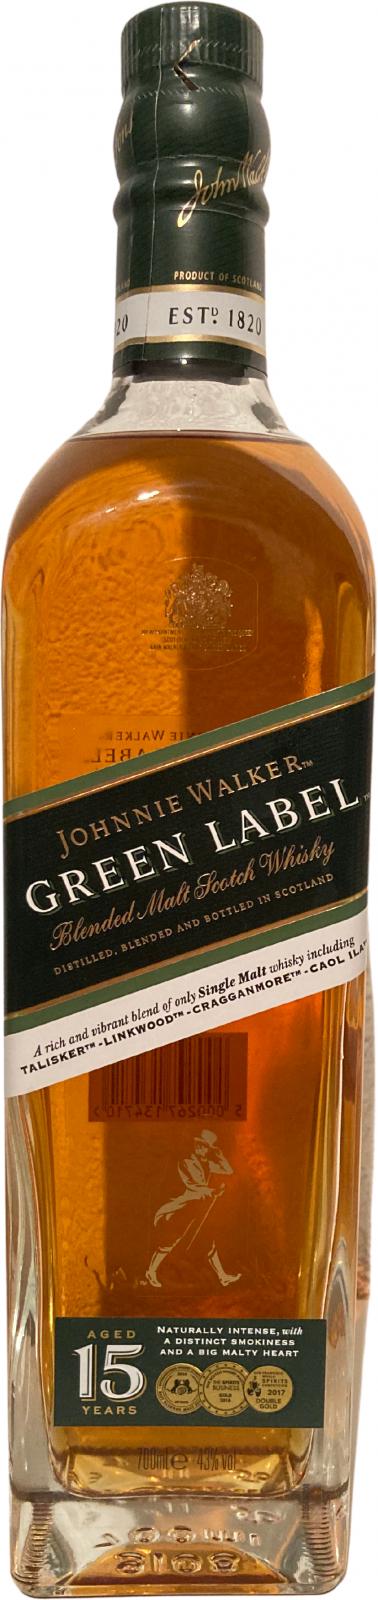 Johnnie Walker Green Label Blended Malt Scotch Whisky European or American Oak 43% 700ml